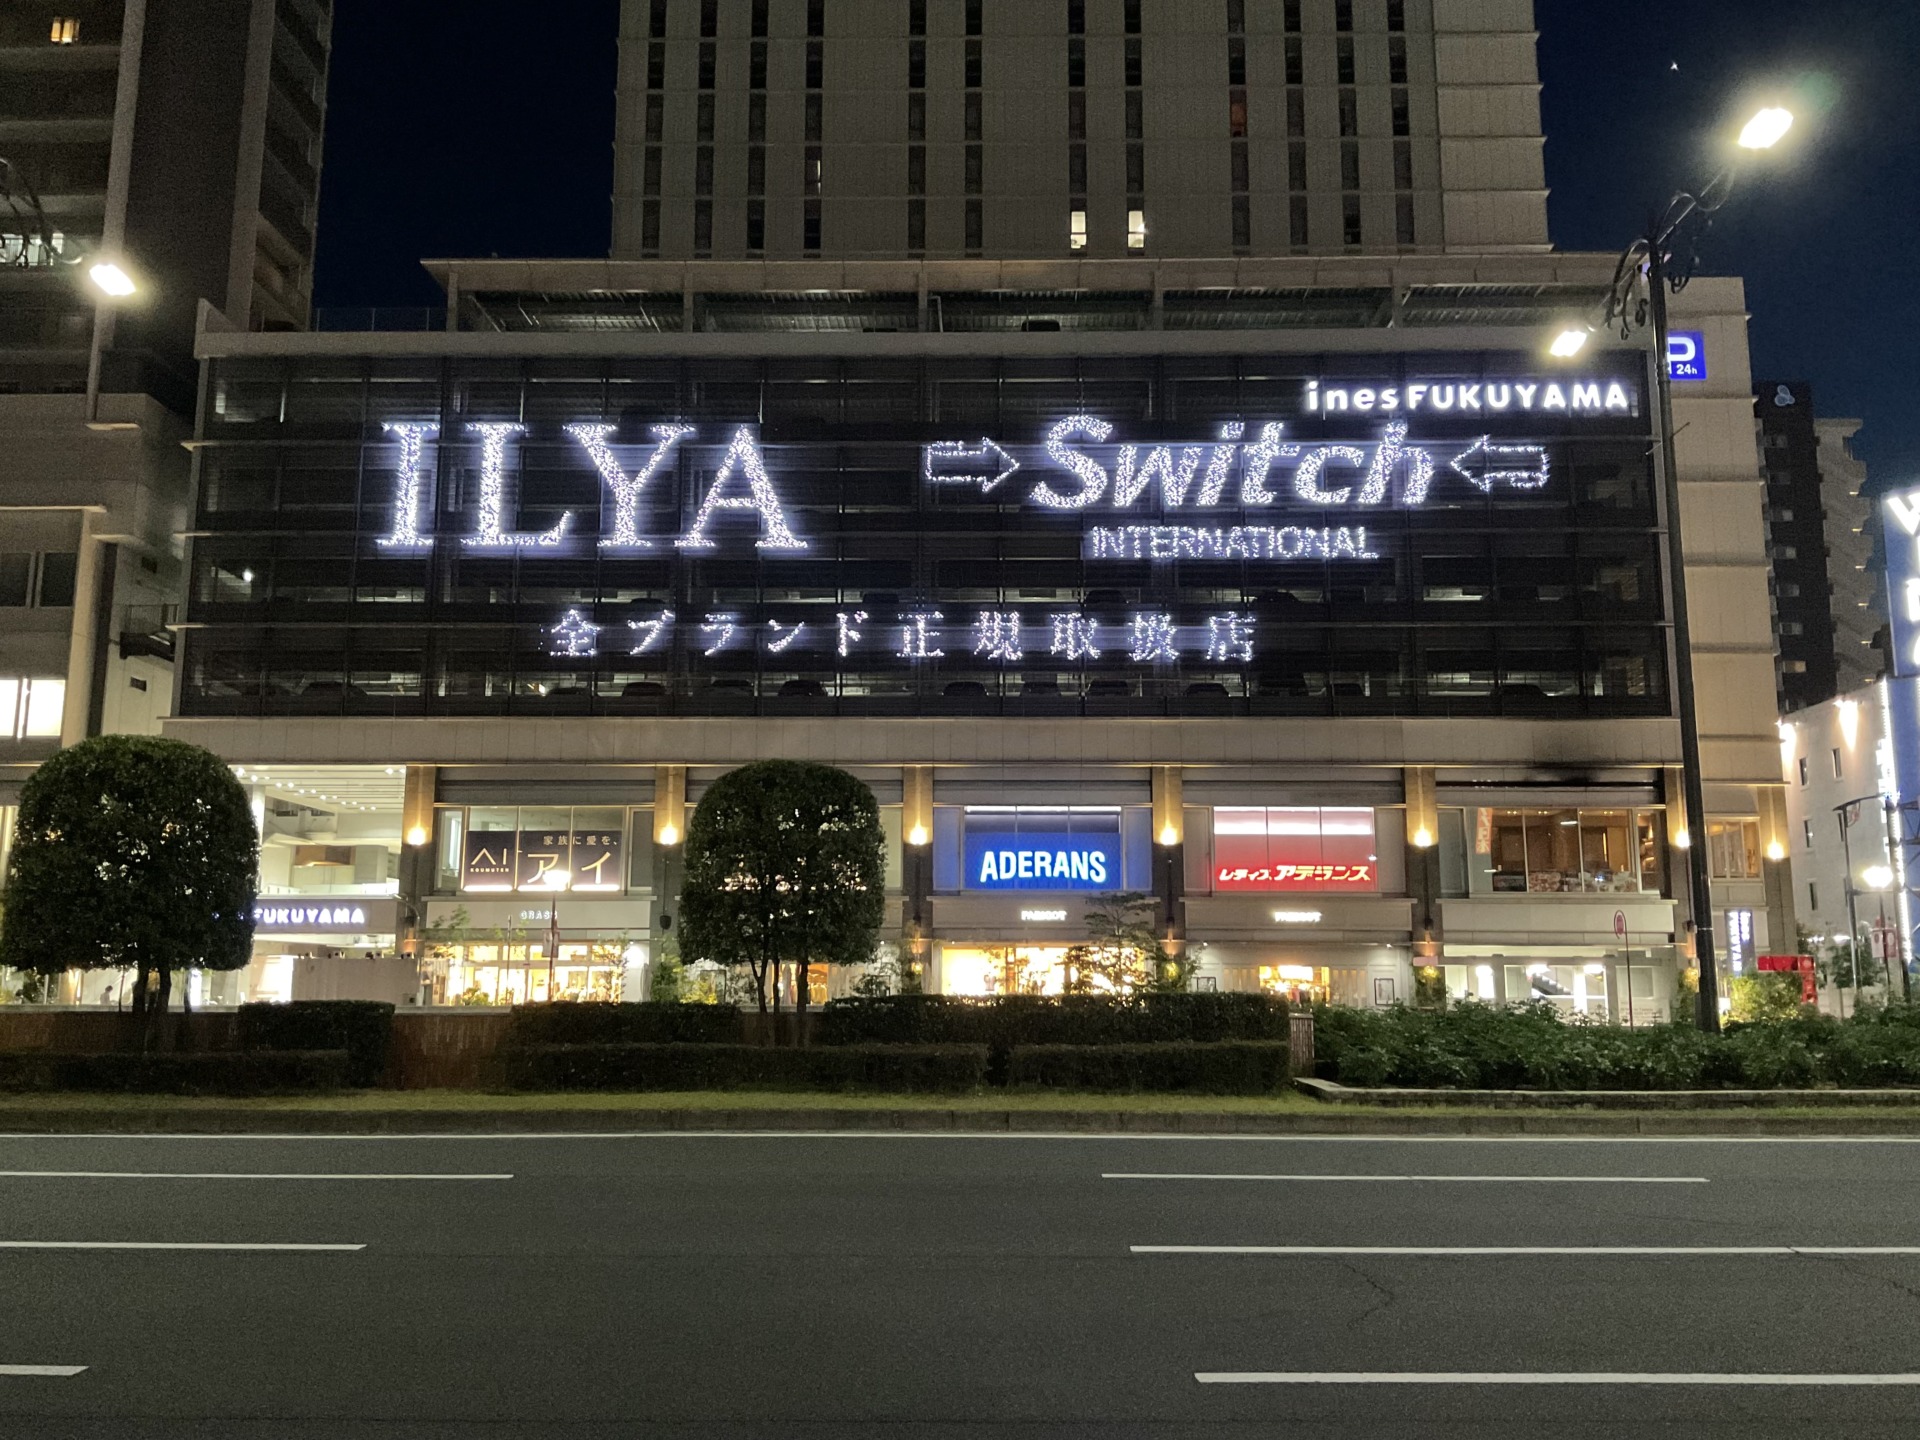 ILYA、Switch　 “アイネス福山ビジョン広告”